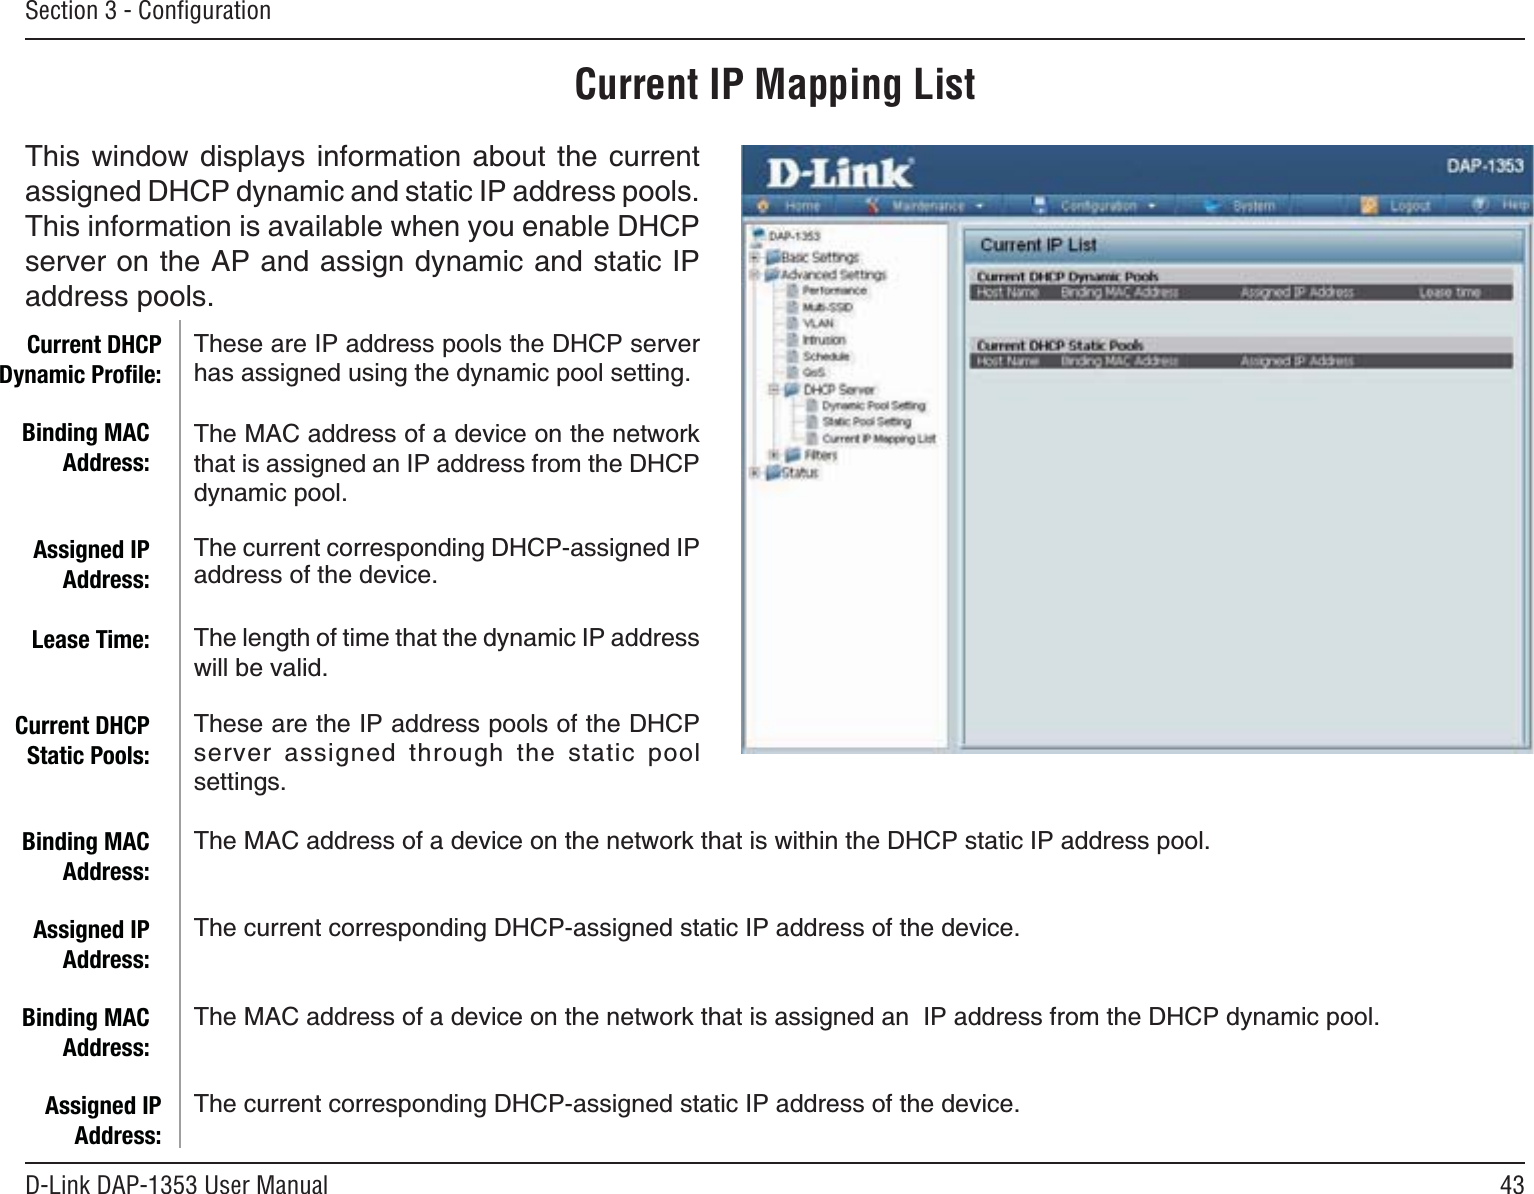 43D-Link DAP-1353 User ManualSection 3 - ConﬁgurationCurrent IP Mapping List6JKUYKPFQYFKURNC[U KPHQTOCVKQP CDQWV VJGEWTTGPVassigned DHCP dynamic and static IP address pools. 6JKUKPHQTOCVKQPKUCXCKNCDNGYJGP[QWGPCDNG&amp;*%2server on the AP and assign dynamic and static IP address pools.These are IP address pools the DHCP server has assigned using the dynamic pool setting.The MAC address of a device on the network that is assigned an IP address from the DHCP dynamic pool.The current corresponding DHCP-assigned IP address of the device.The length of time that the dynamic IP address YKNNDGXCNKFThese are the IP address pools of the DHCP server assigned through the static pool settings.The MAC address of a device on the network that is within the DHCP static IP address pool.The current corresponding DHCP-assigned static IP address of the device.The MAC address of a device on the network that is assigned an  IP address from the DHCP dynamic pool.The current corresponding DHCP-assigned static IP address of the device.Current DHCP Dynamic Proﬁle:Binding MAC Address:Assigned IP Address:Lease Time:Current DHCP Static Pools:Binding MAC Address:Assigned IP Address:Binding MAC Address:Assigned IP Address: